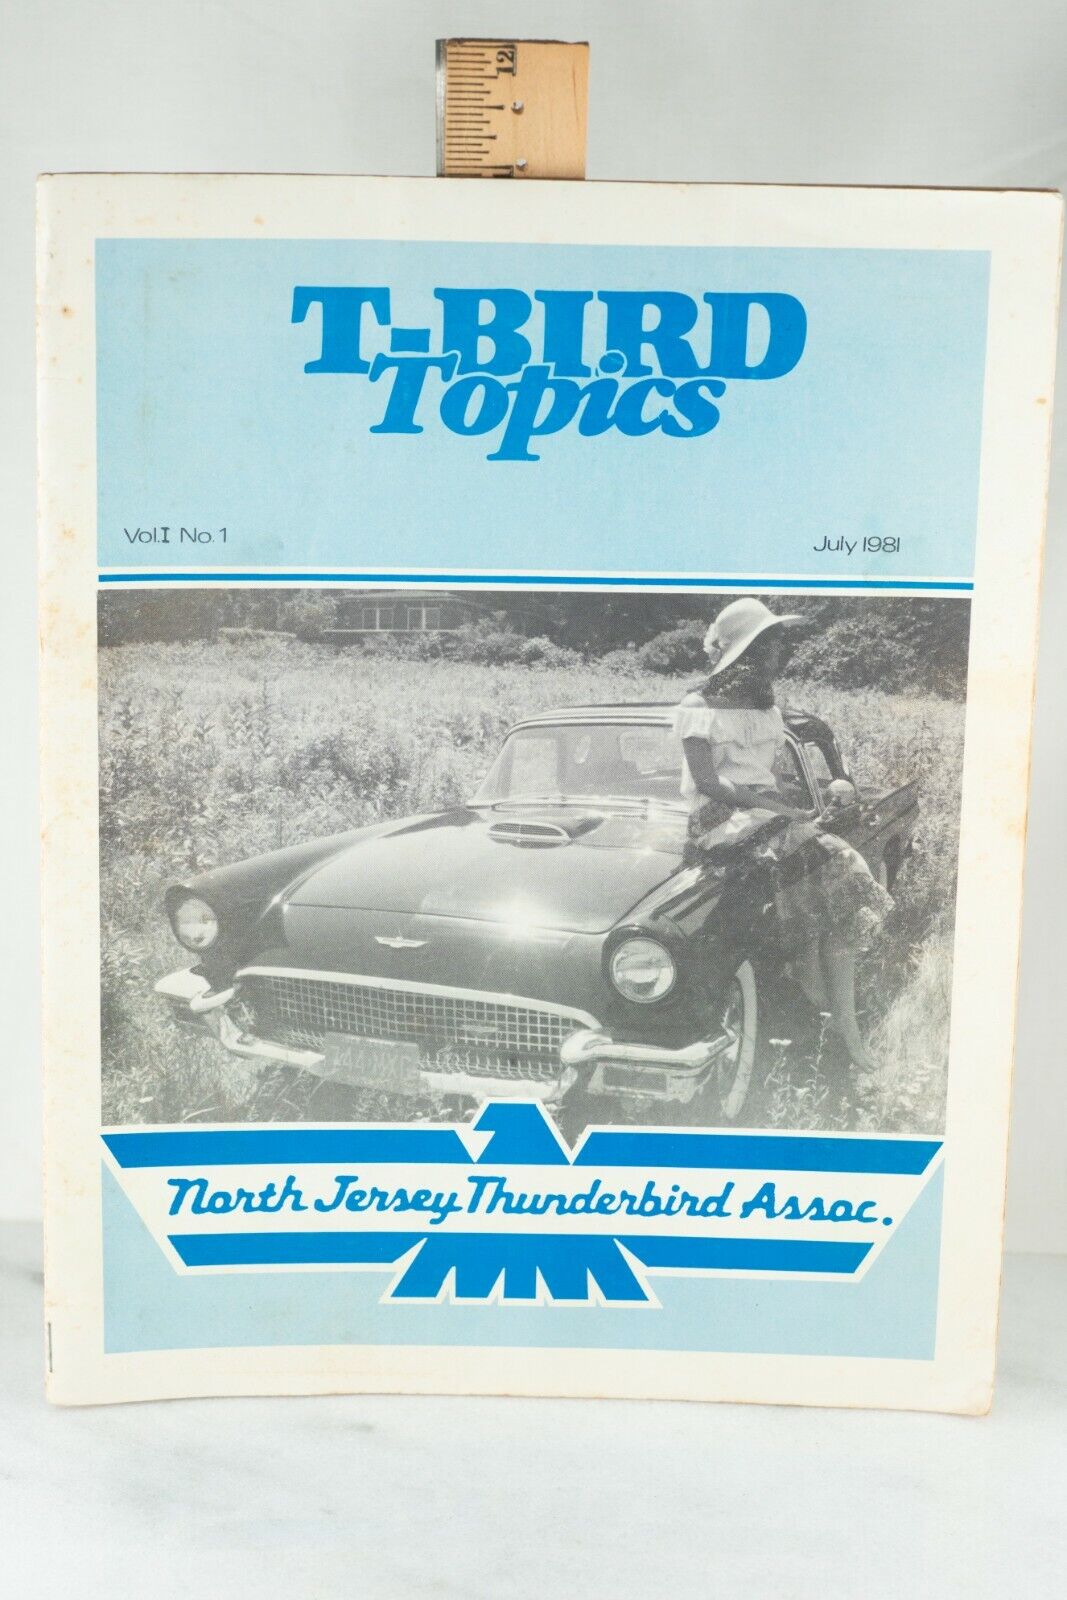 RARE 1981 T-Bird Topics, Vintage Ford Thunderbird Vol. 1 No. 1 Magazine Issue